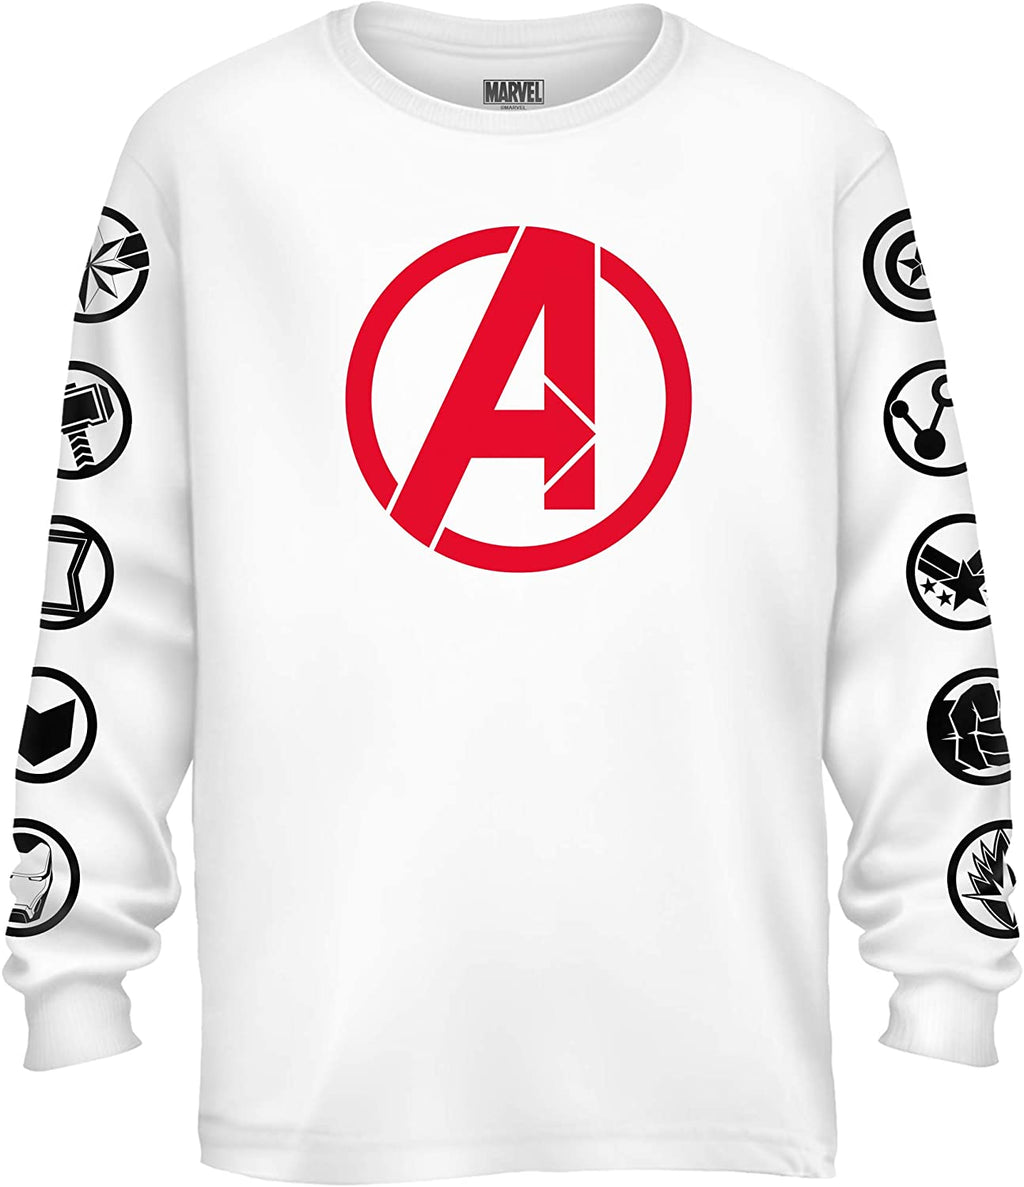 Avengers Endgame Marvel White Longsleeve Logo Symbol T-Shirt Hulk Iron Man Black Widow Thor Captain America